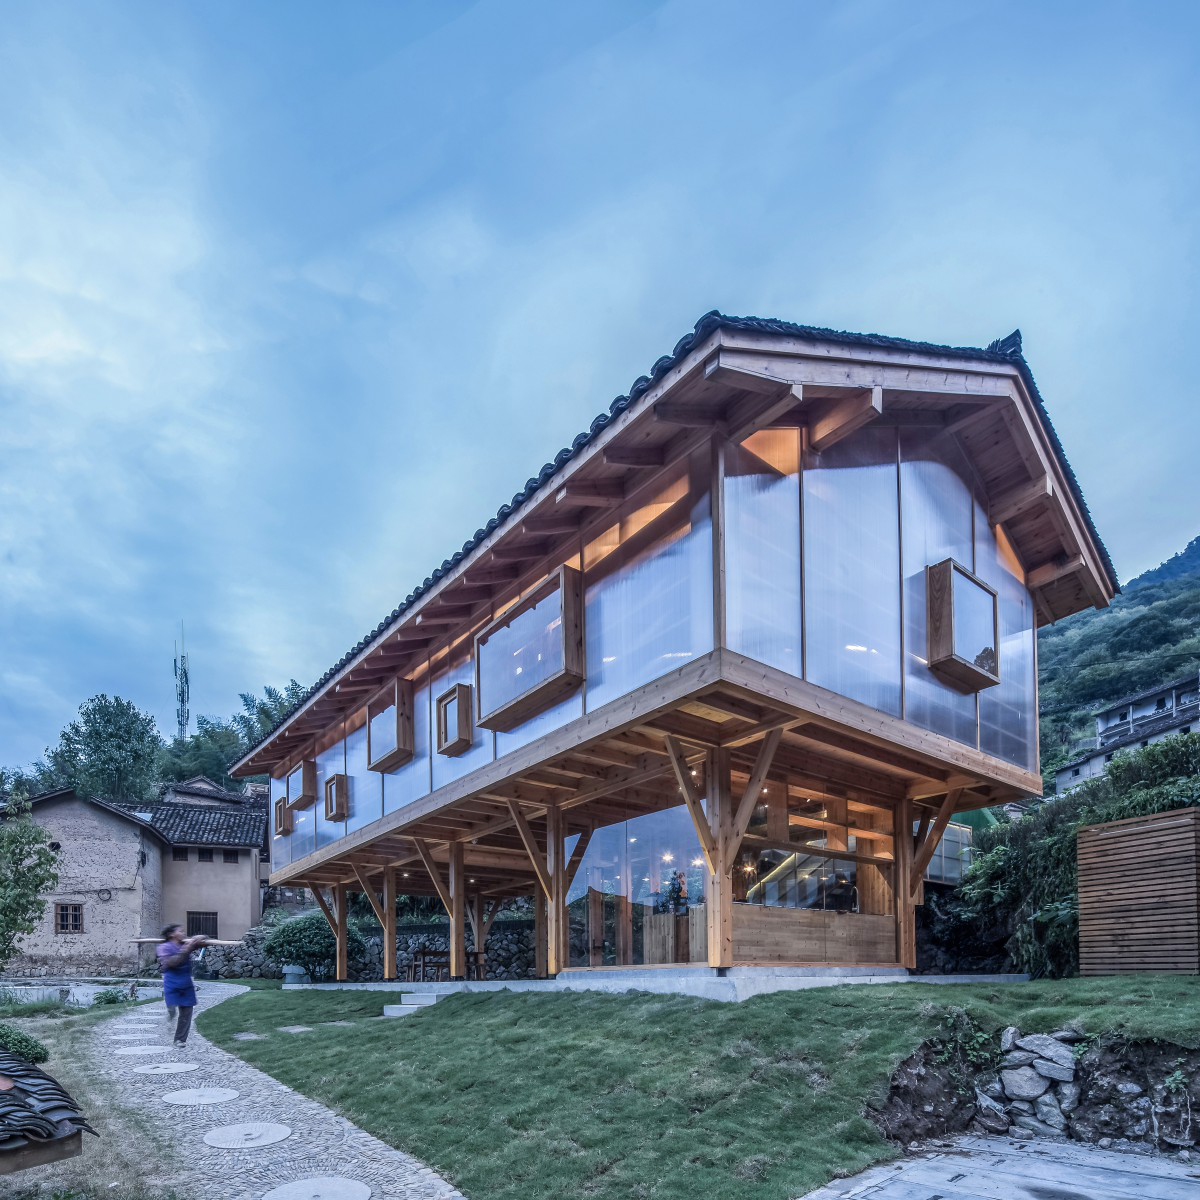 Mountain House in Mist book villa by Lin Chen